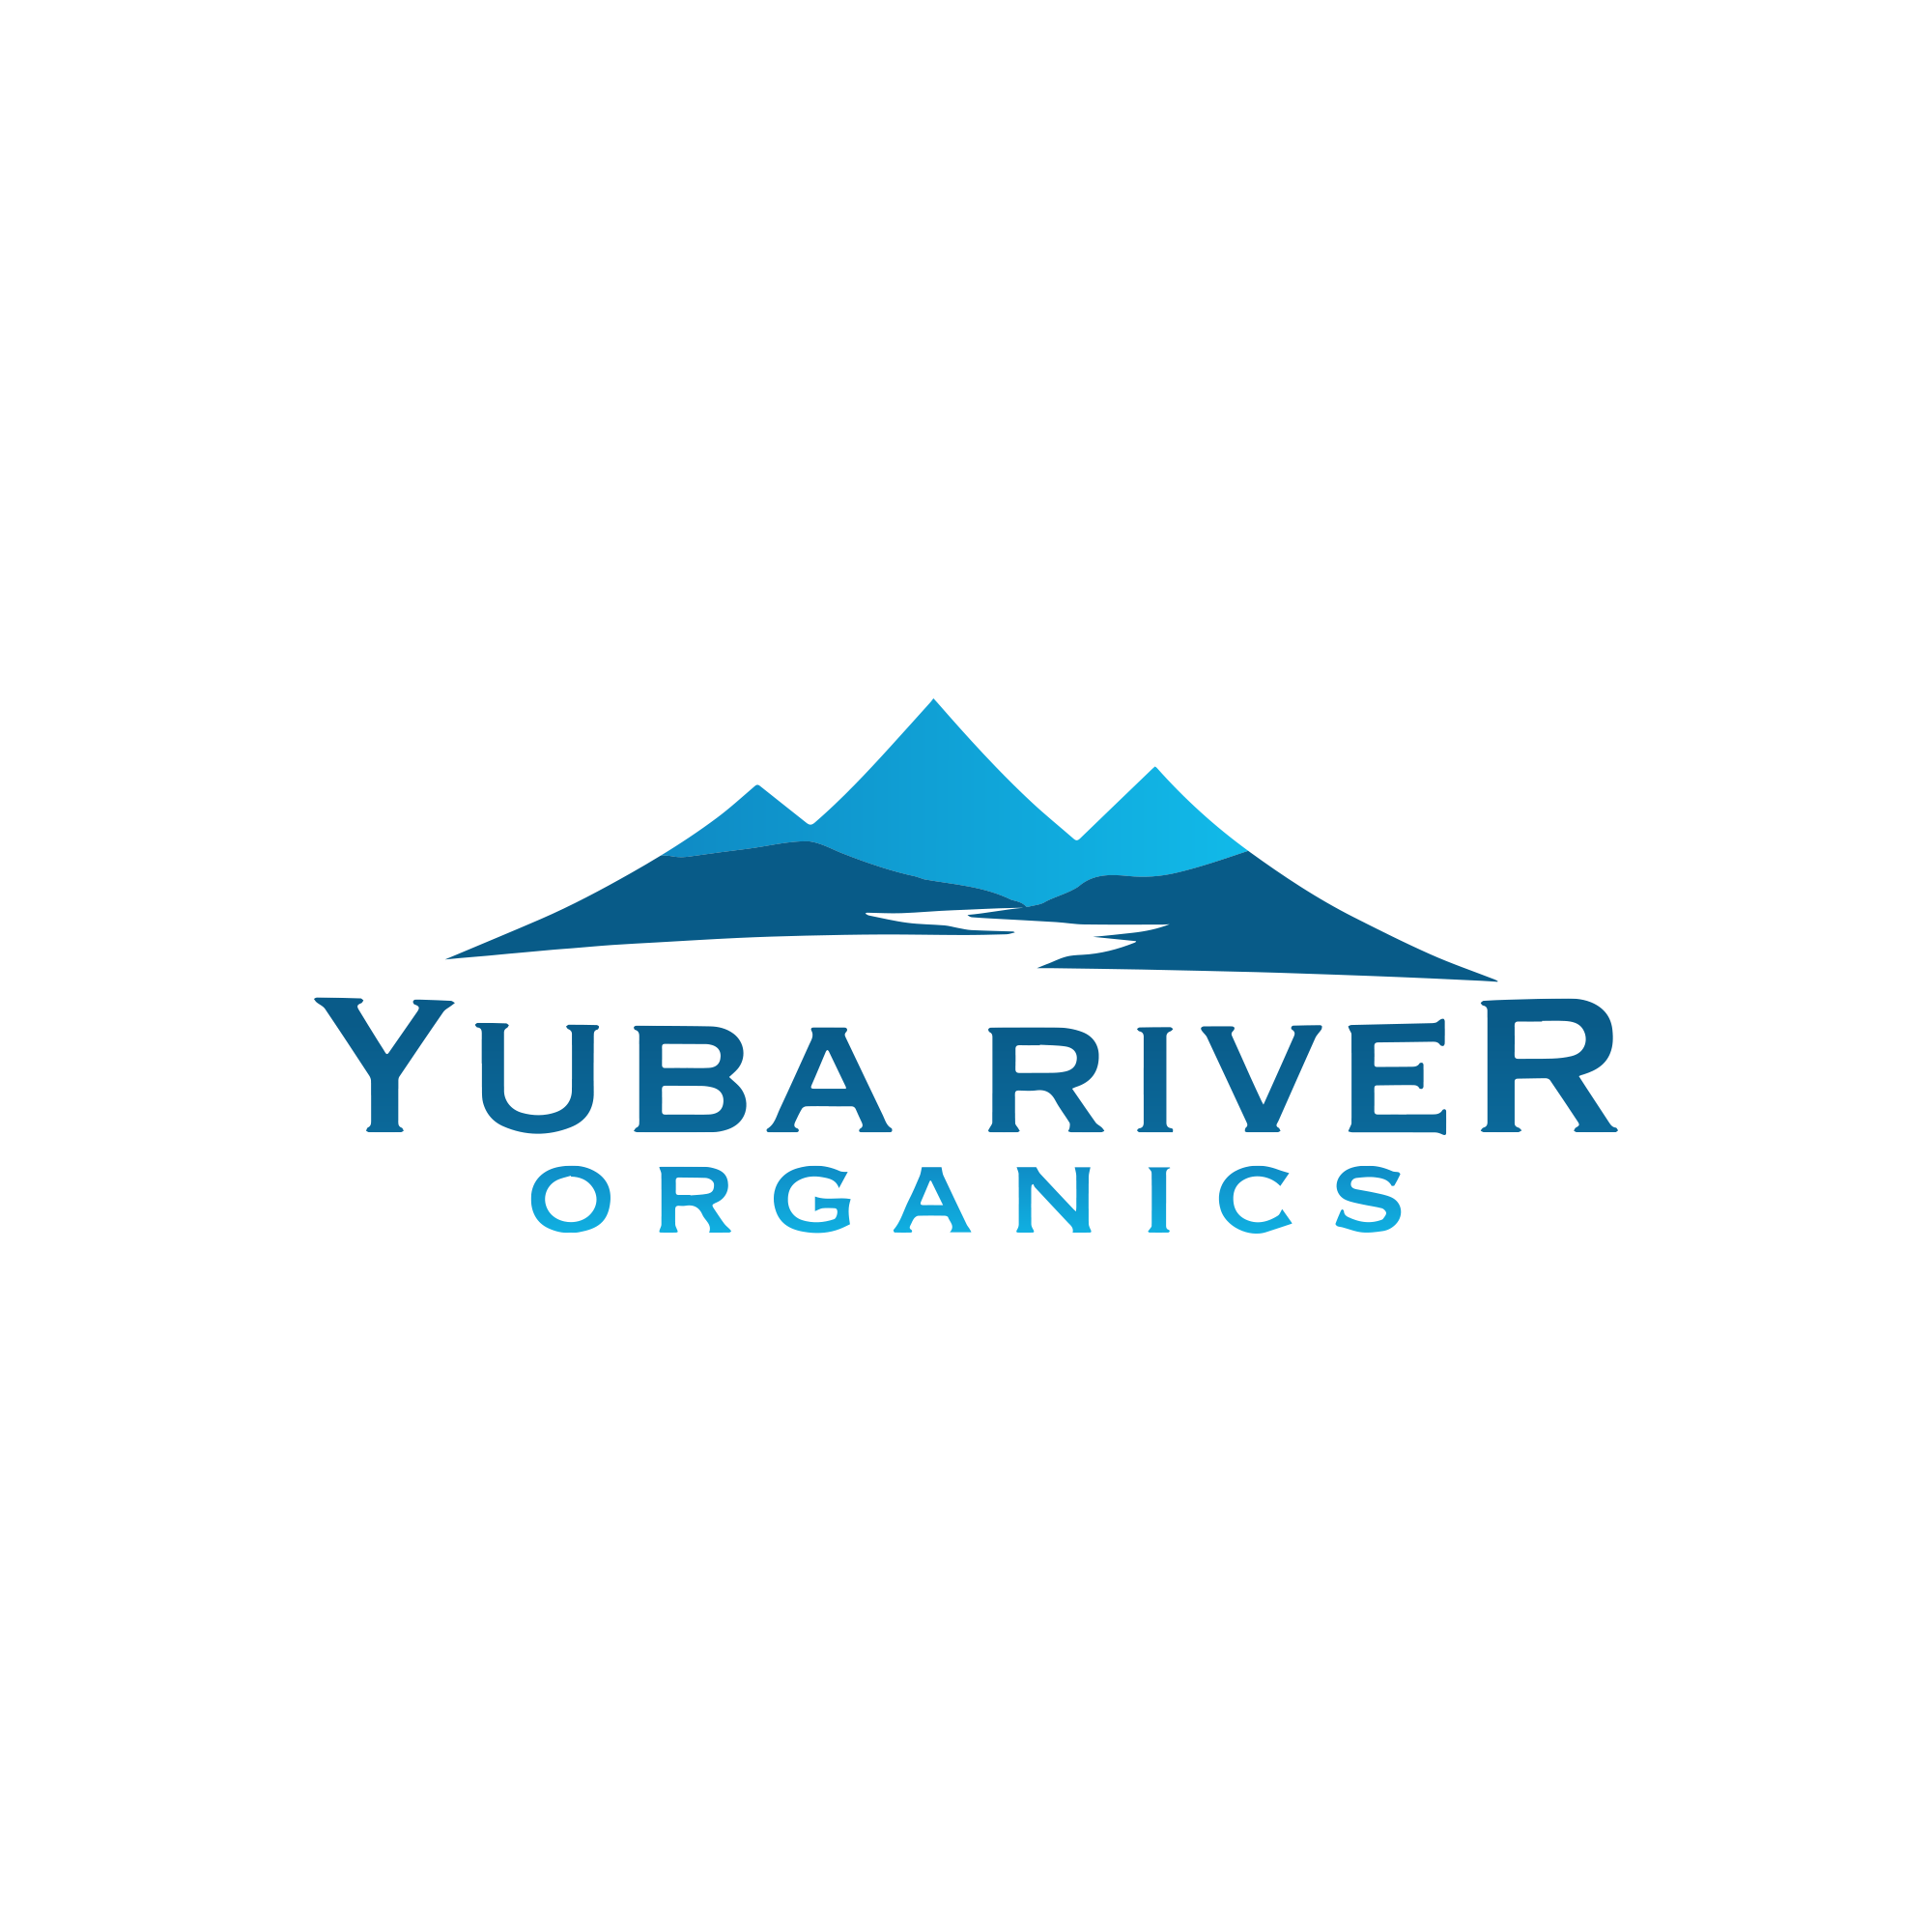 YUBA RIVER ORGANICS